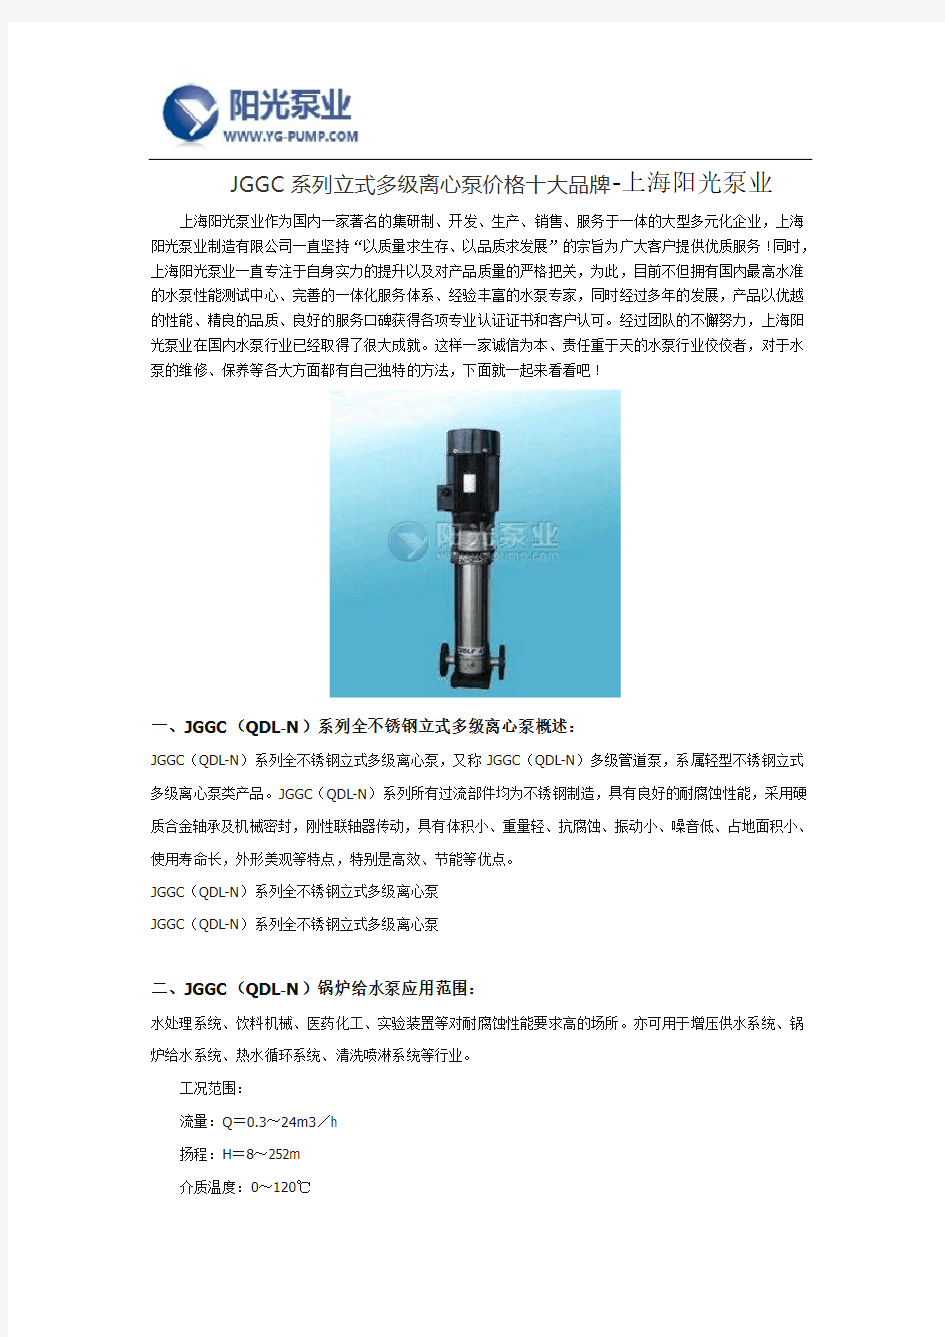 JGGC(QDL-N)系列全不锈钢立式多级离心泵价格十大品牌-上海阳光泵业